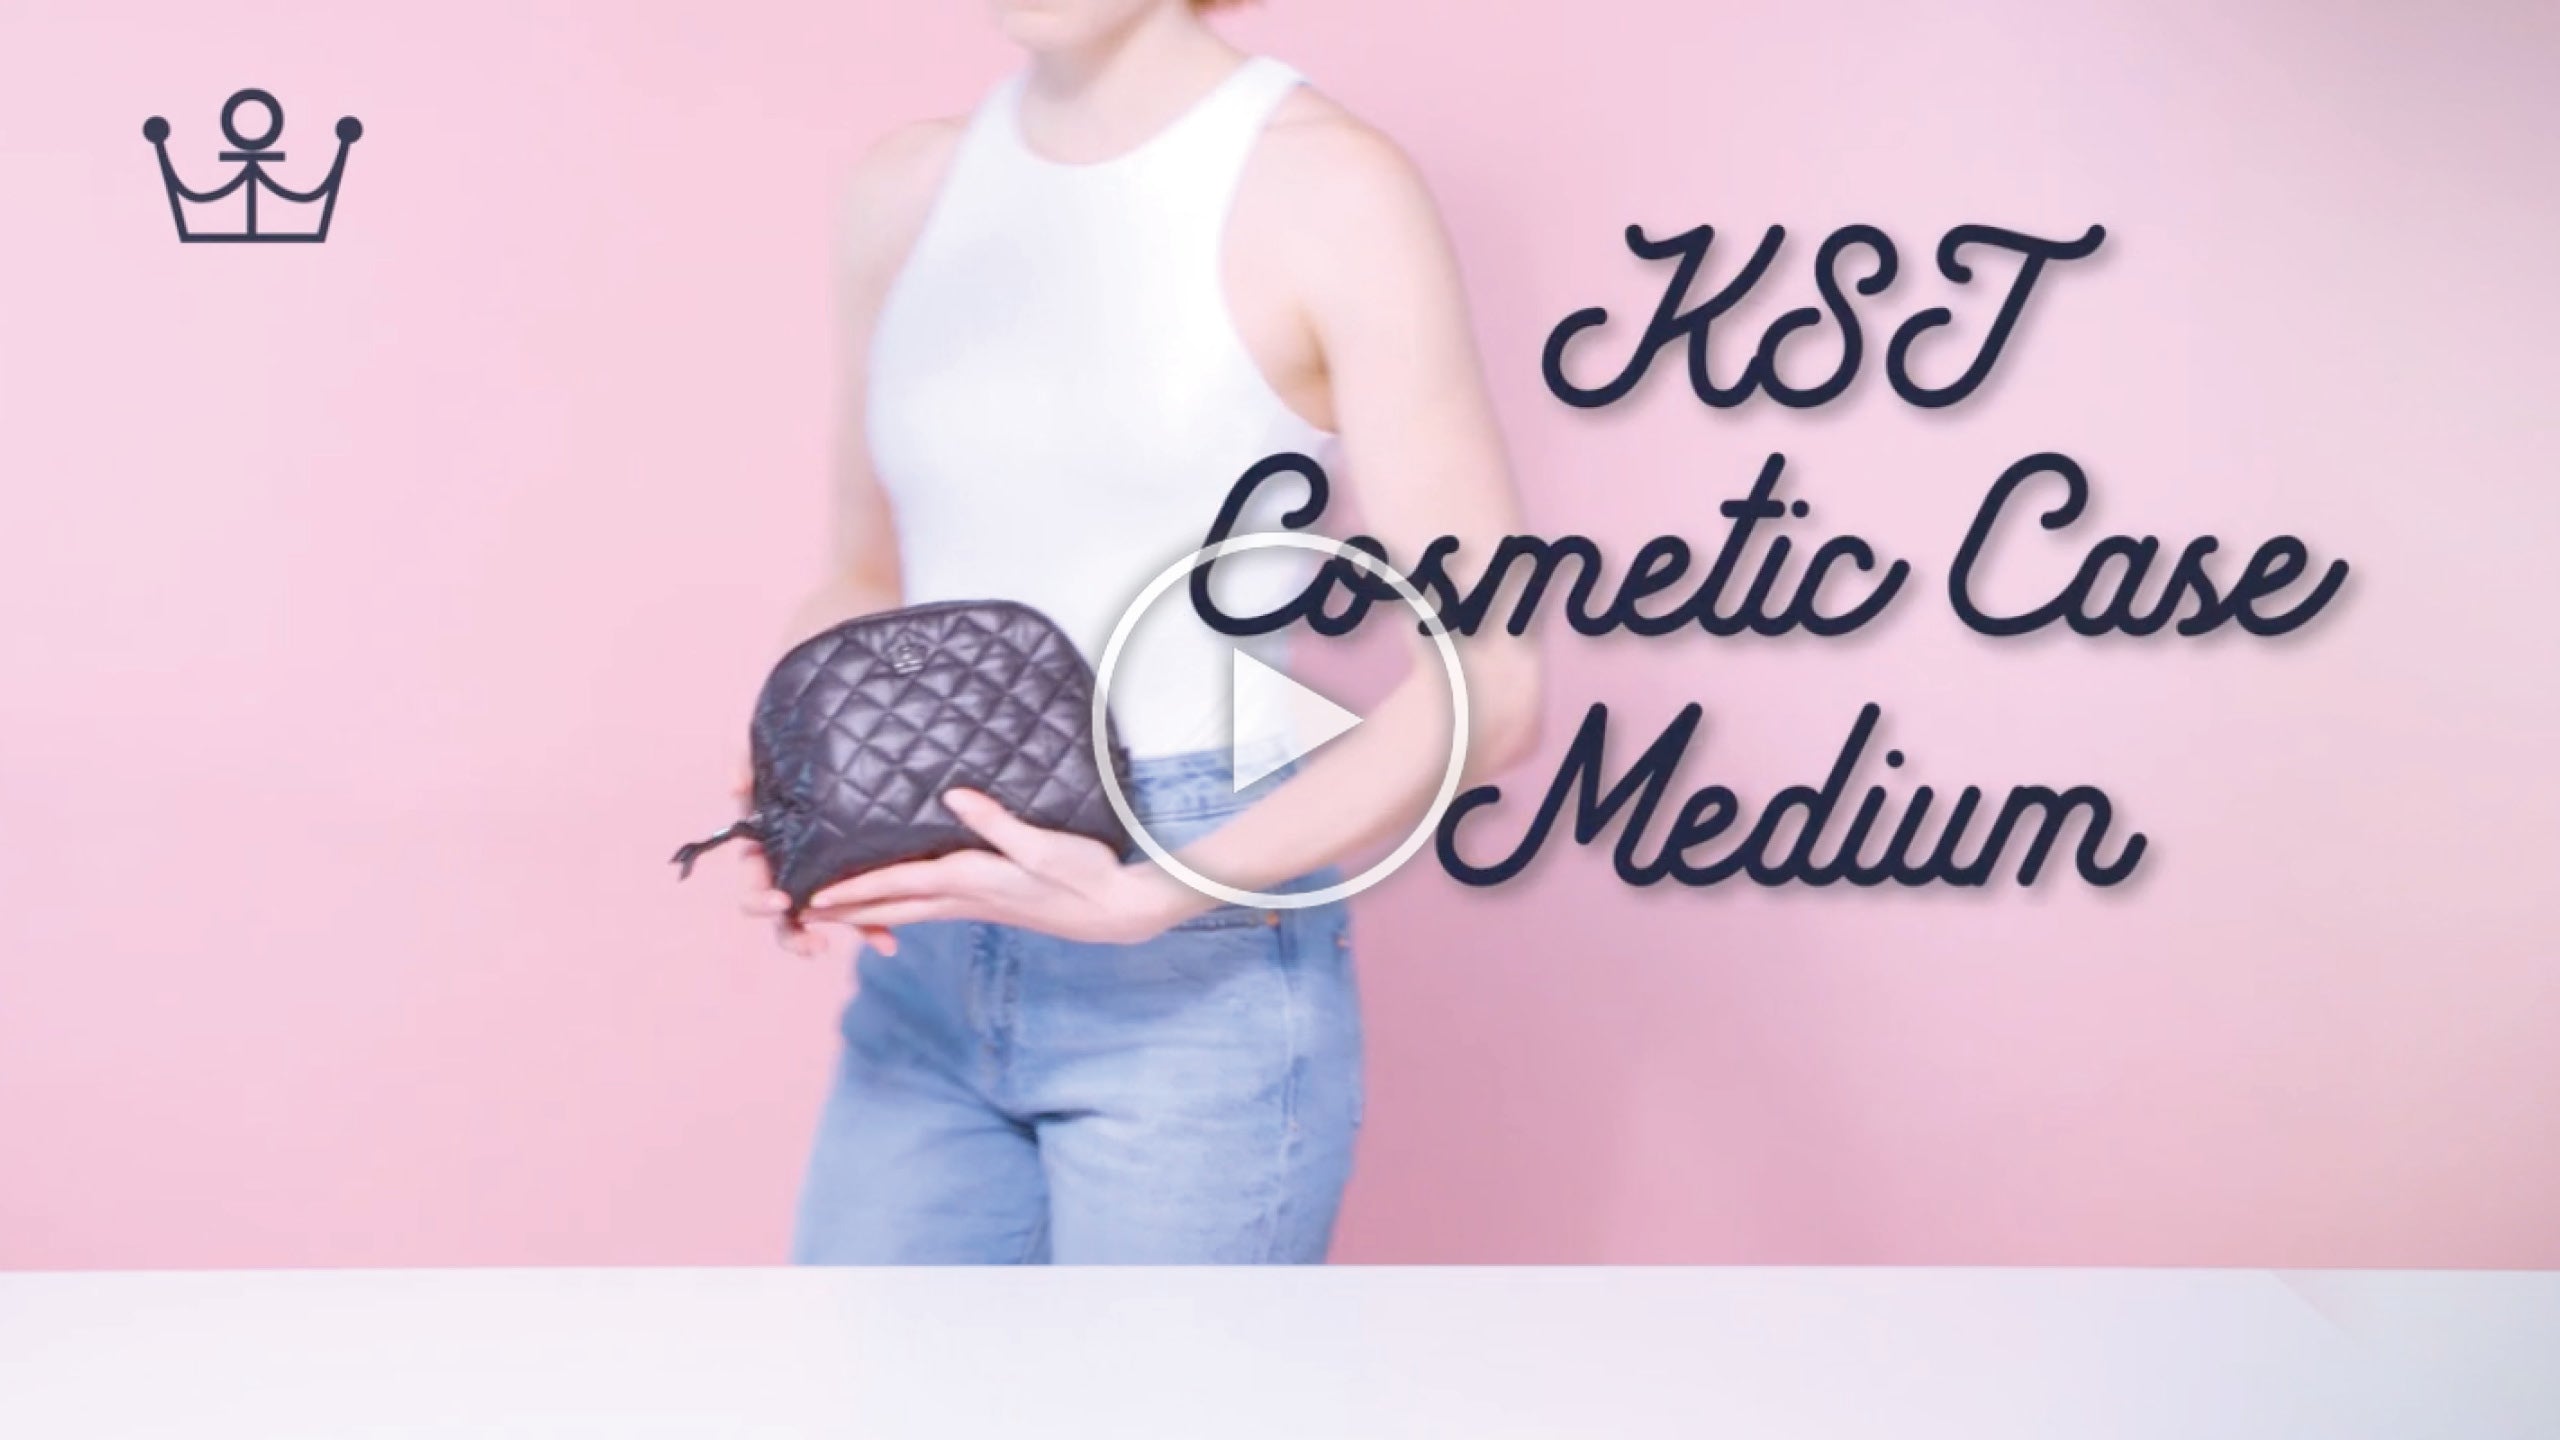 Video of KST Cosmetic Case Medium